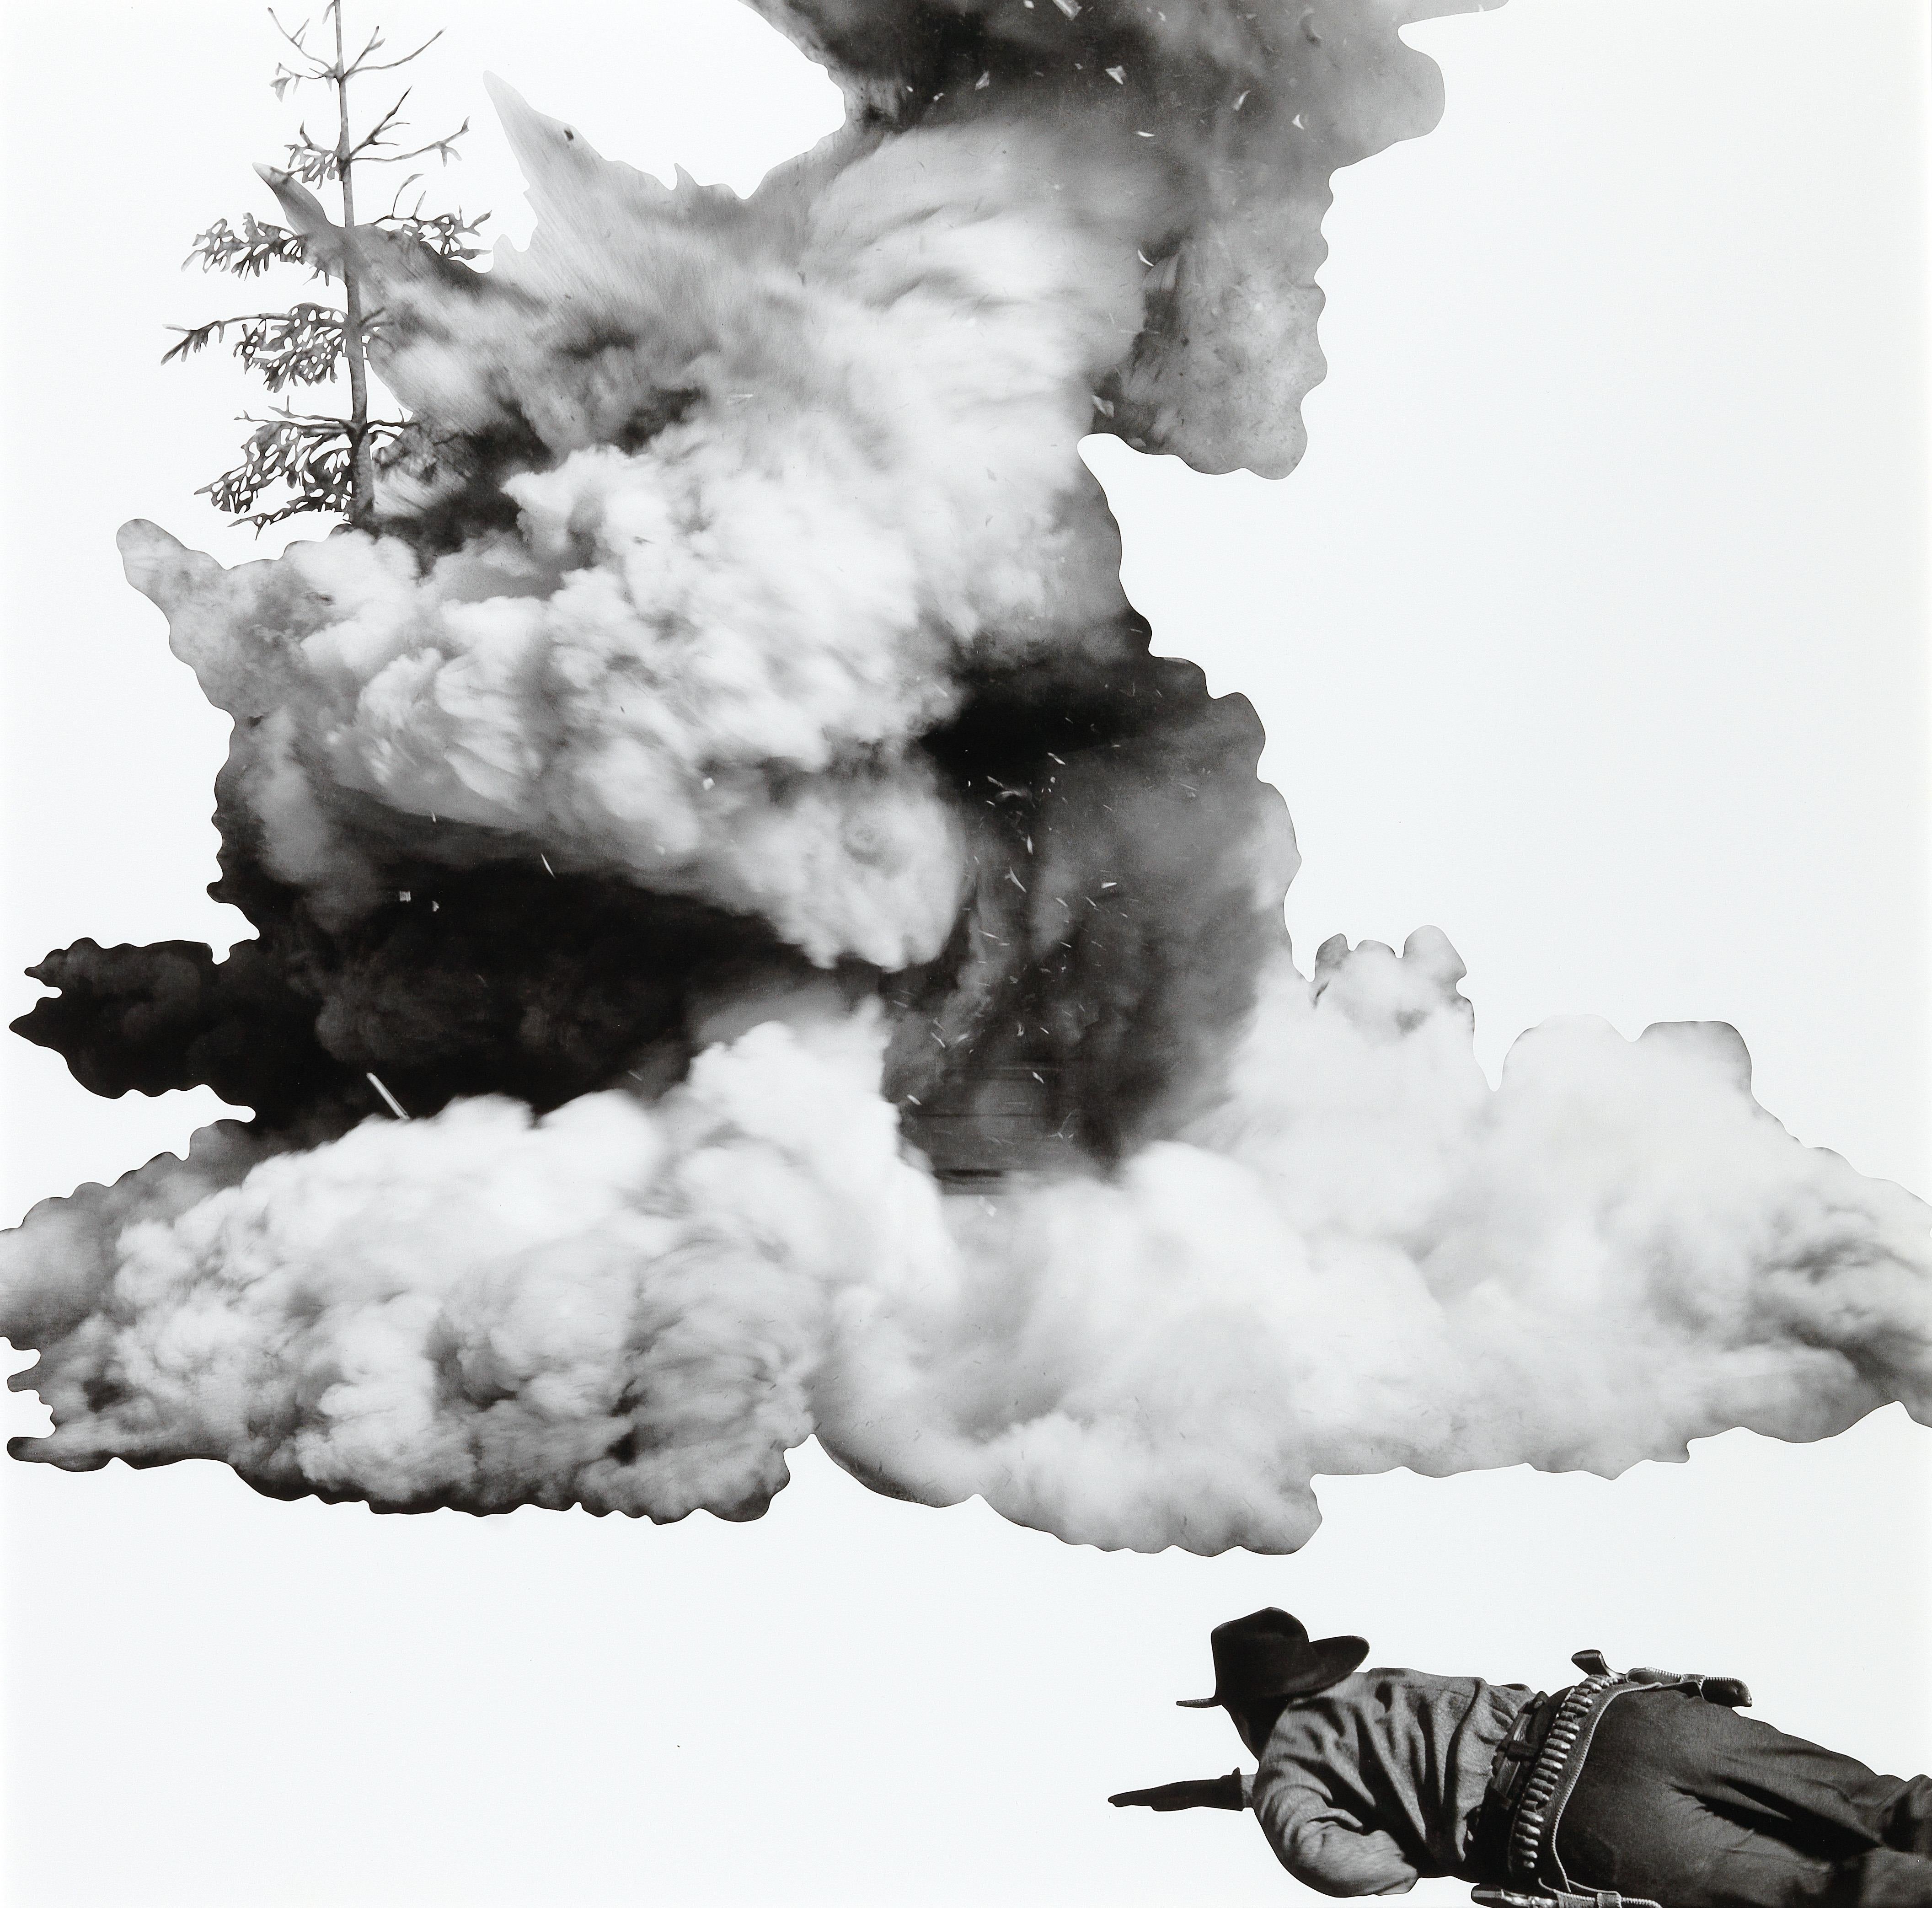 Smoke, Tree, Shadow, and Person - Contemporary Print by John Baldessari